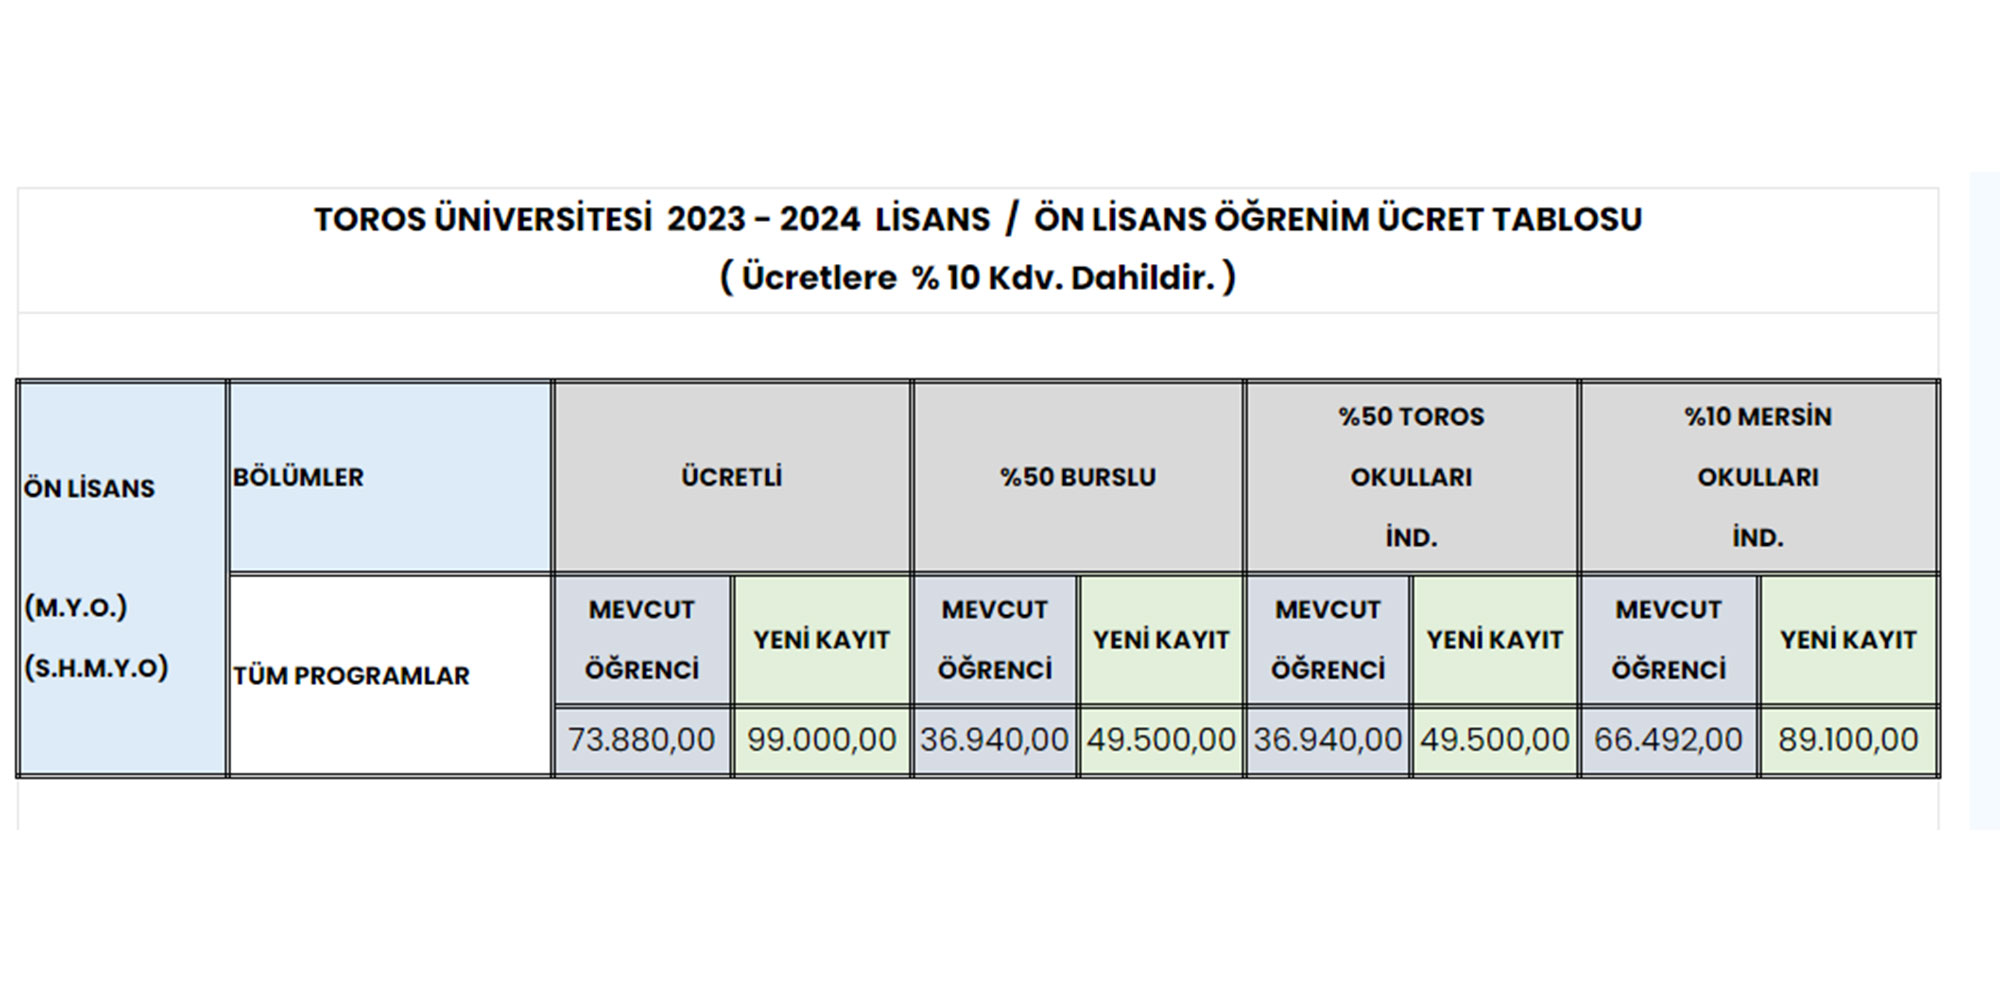 toros universitesi 2023 2024 egitim uscretleri